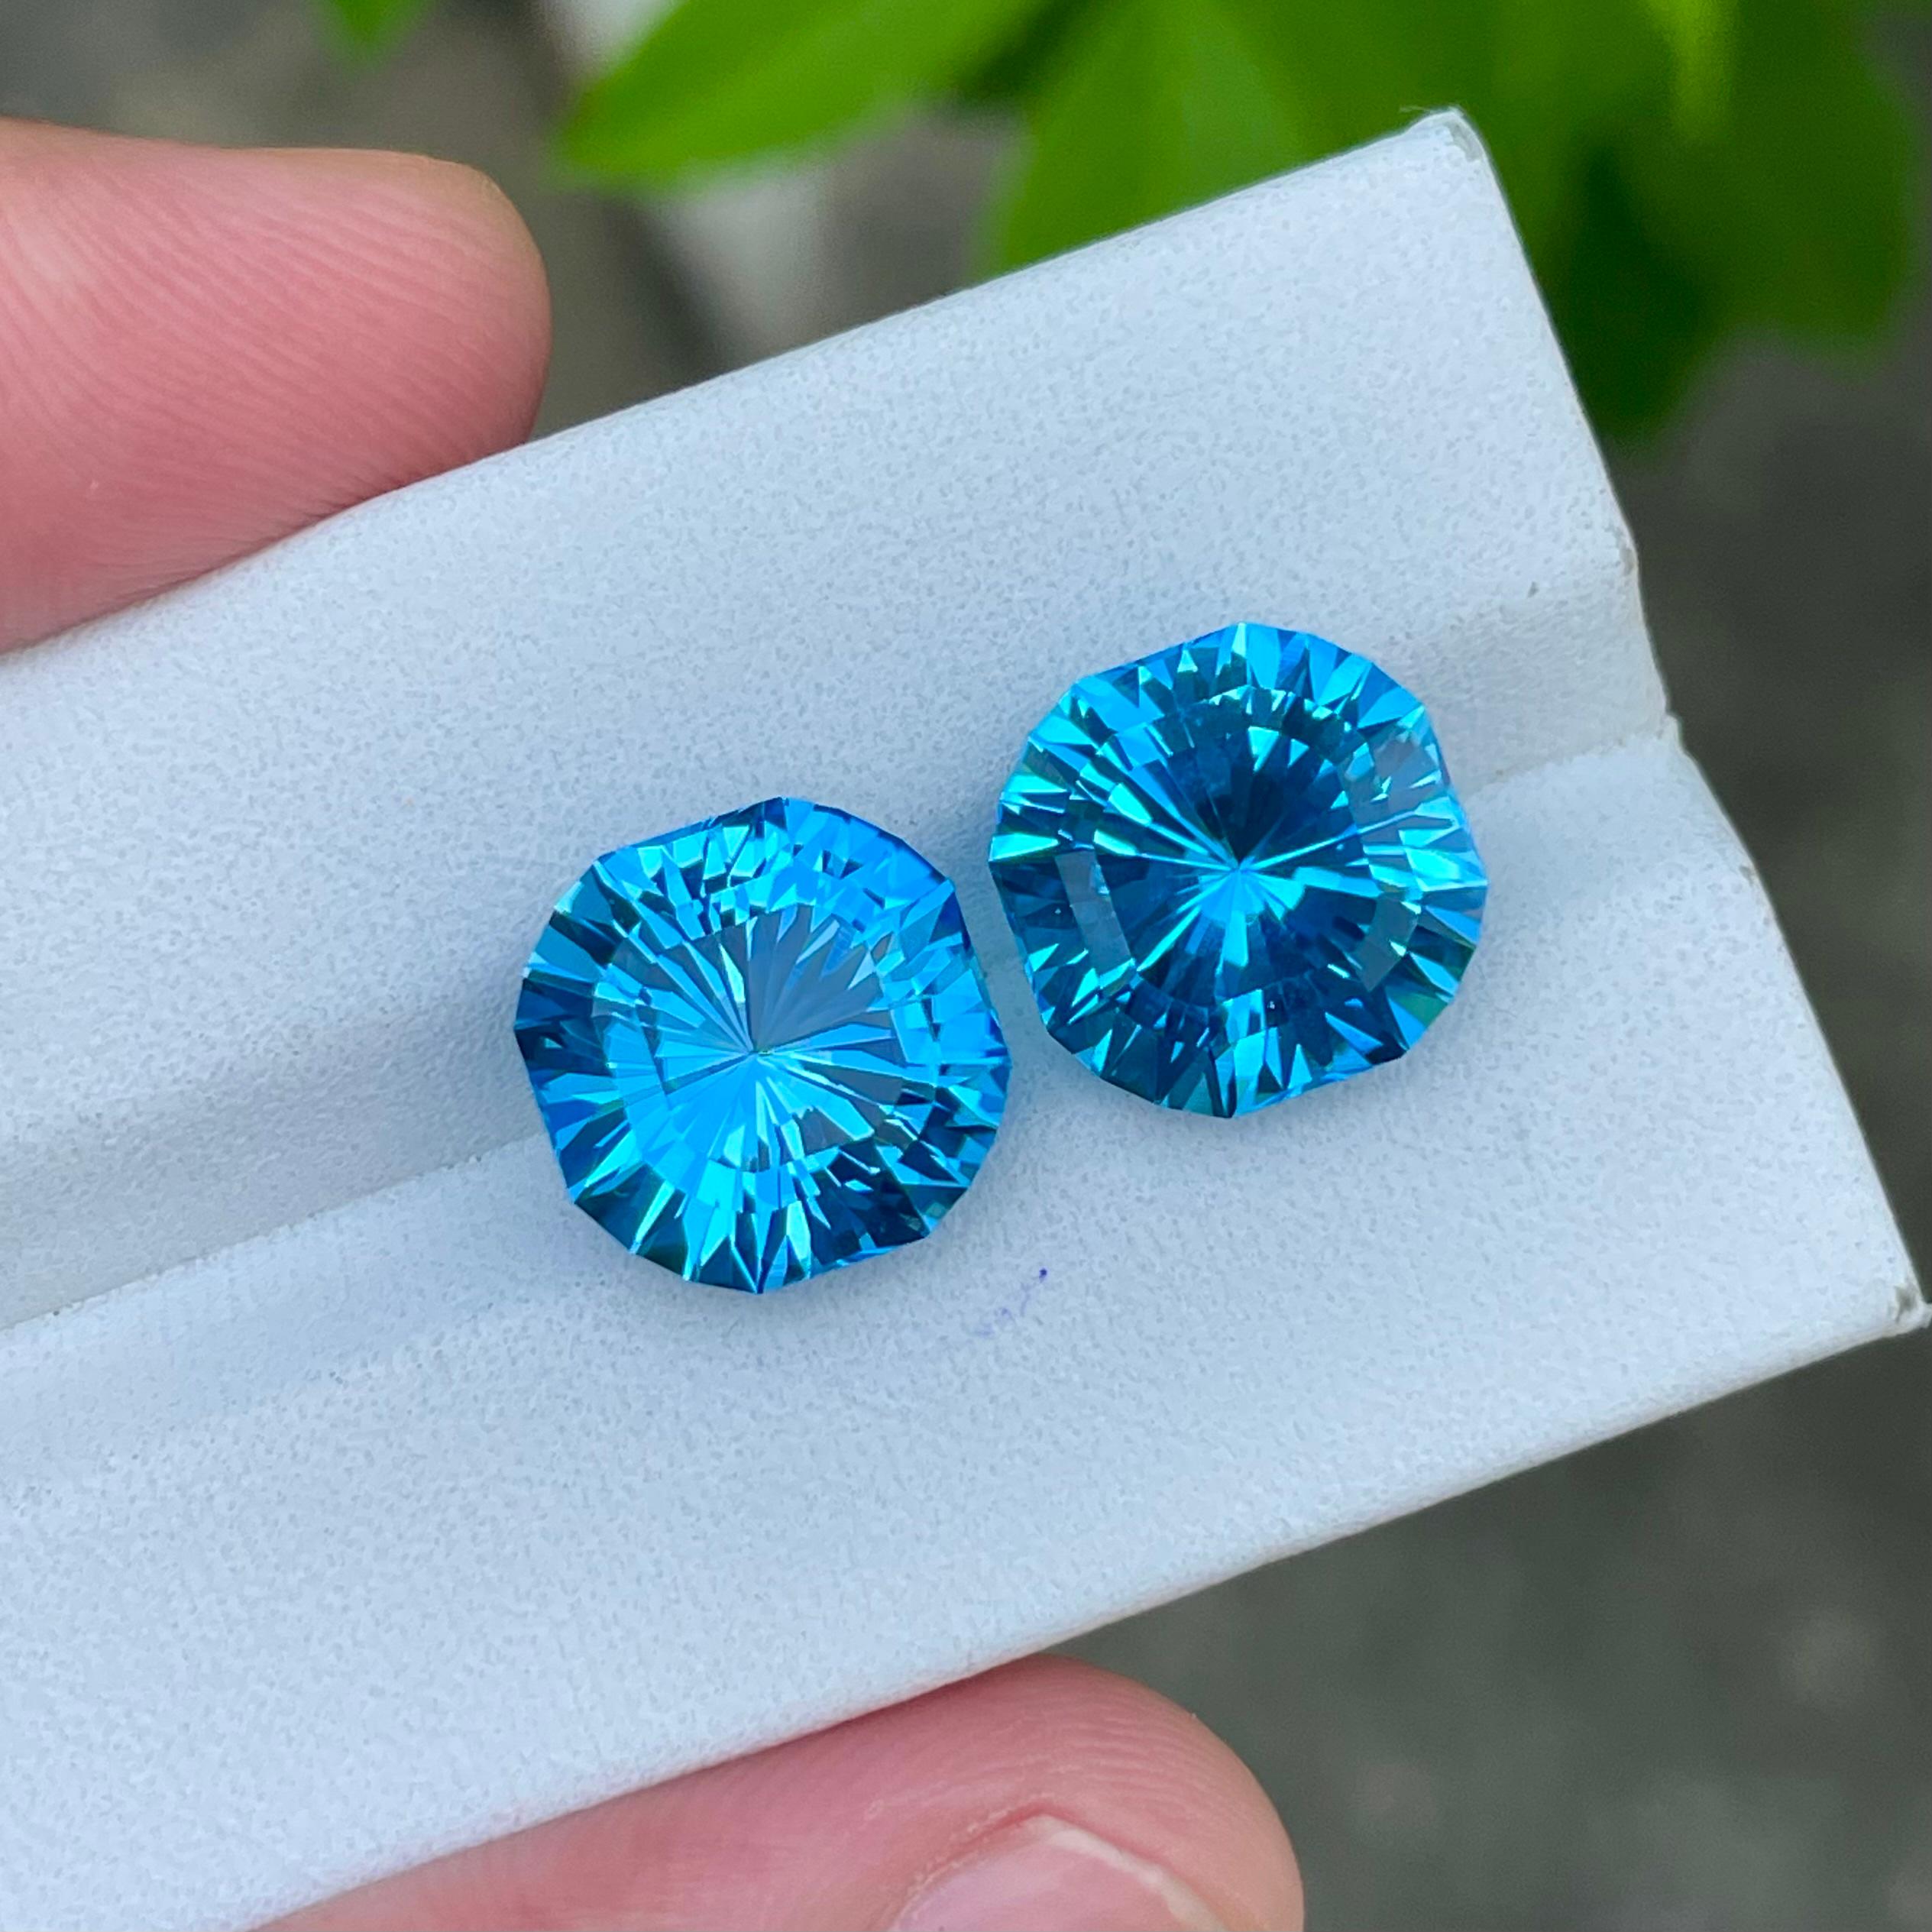 Mixed Cut Fancy Cut Neon Blue Topaz Pair 13.90 carats Natural Madagascar's Gemstones For Sale